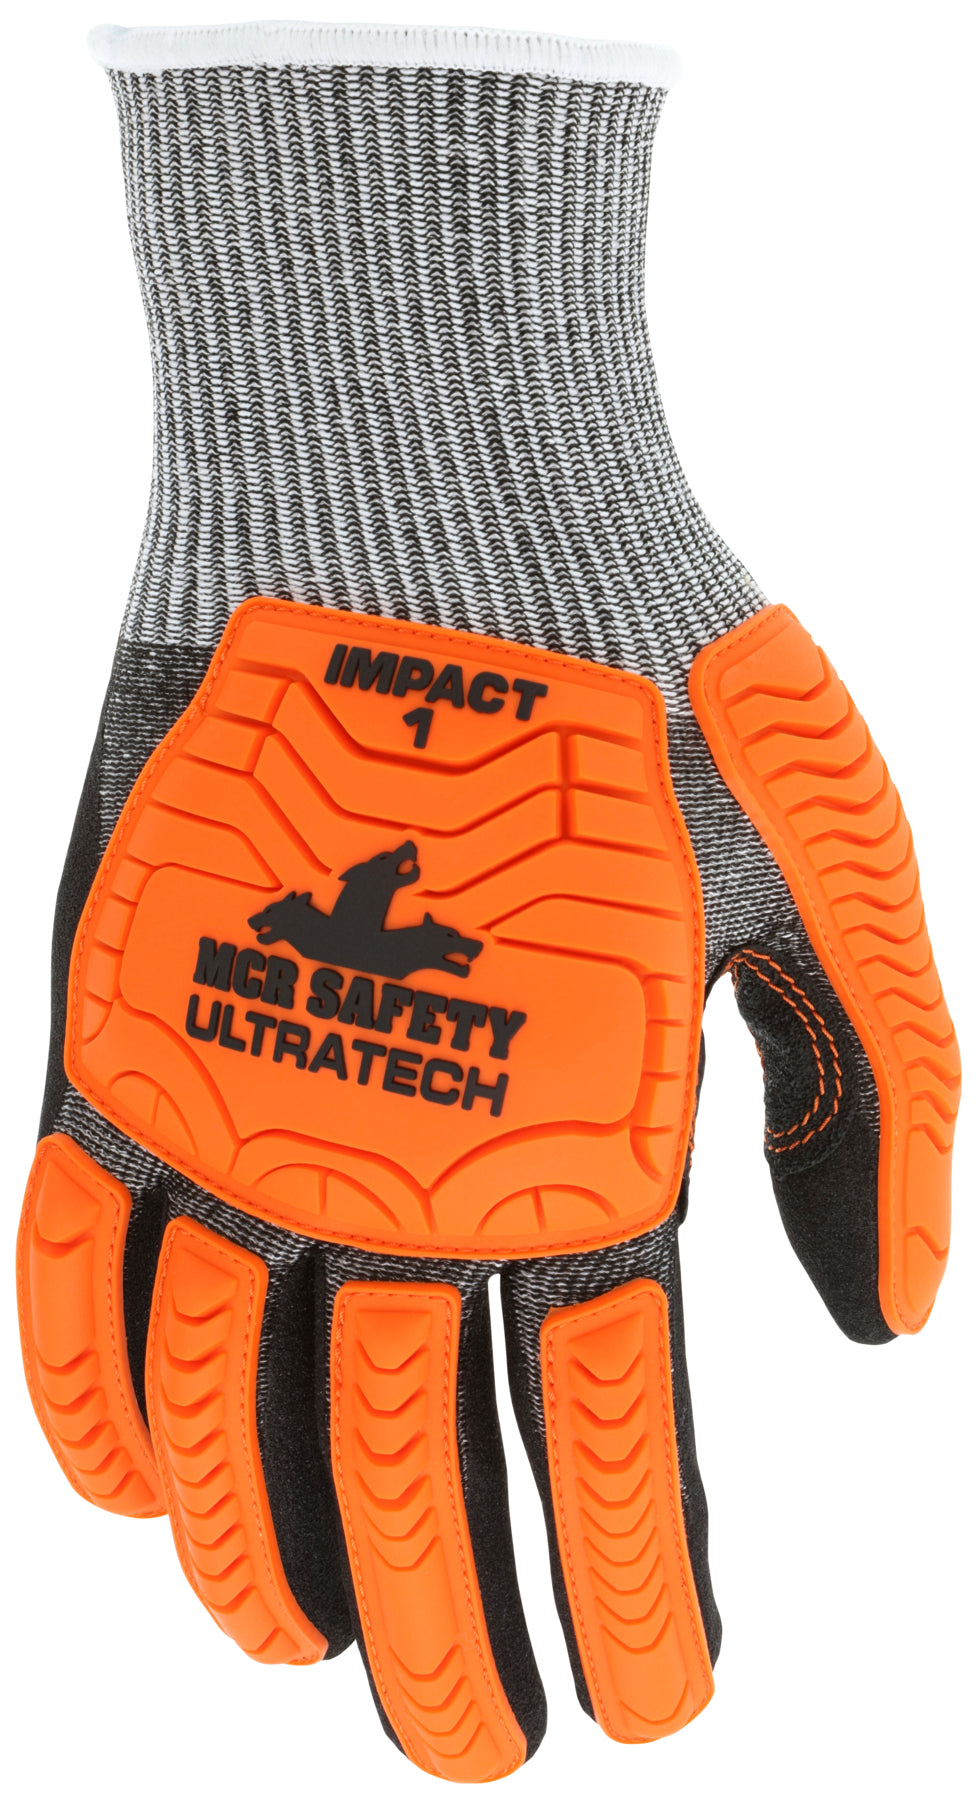 Ultratec Football Goalkeeper Gloves